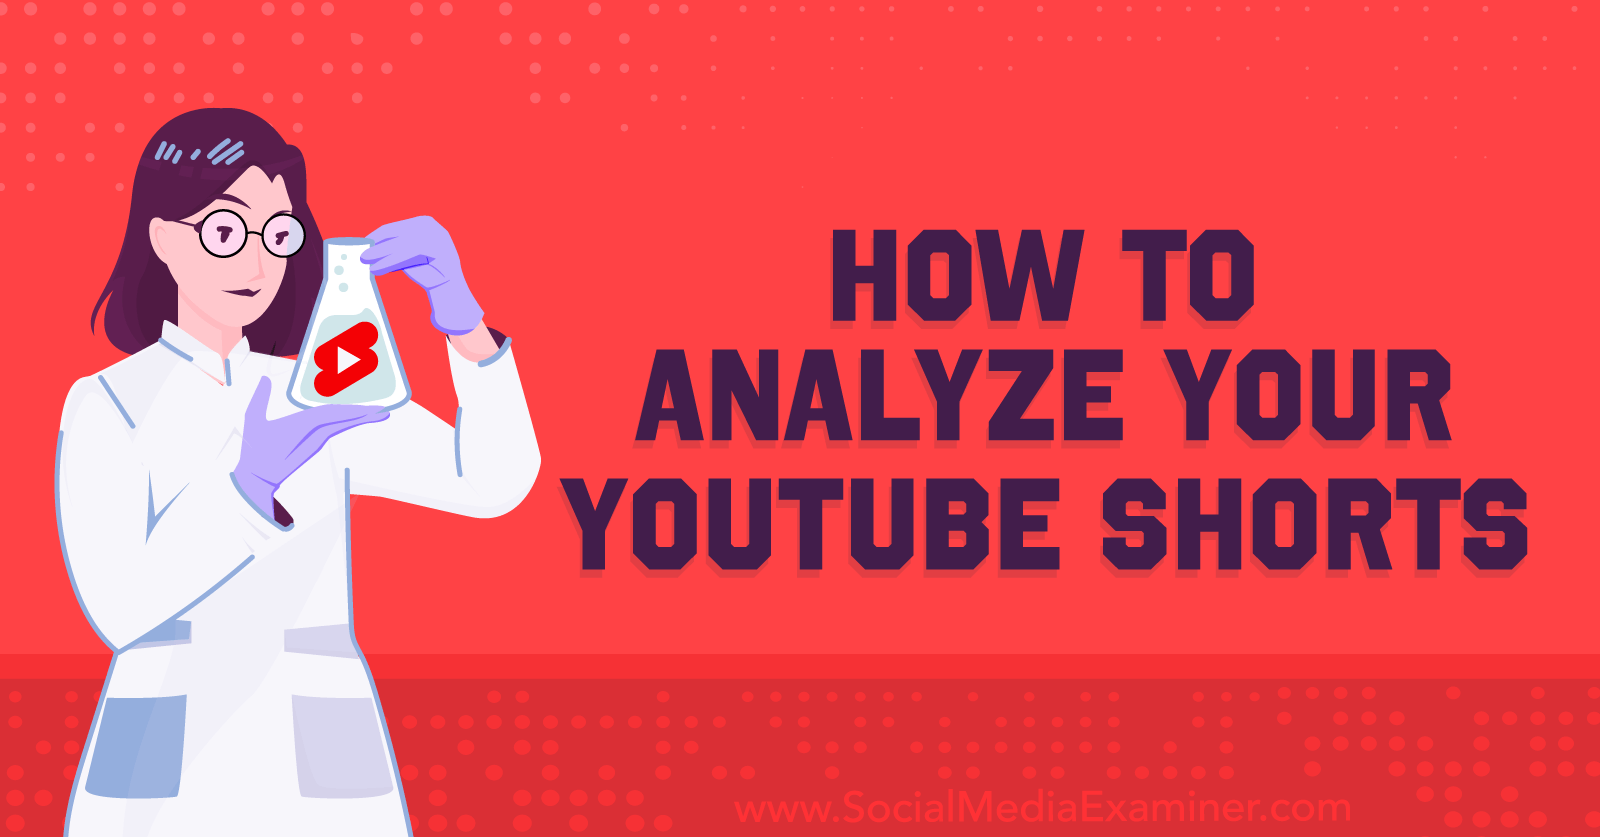 How to Analyze Your YouTube Shorts by Social Media Examiner